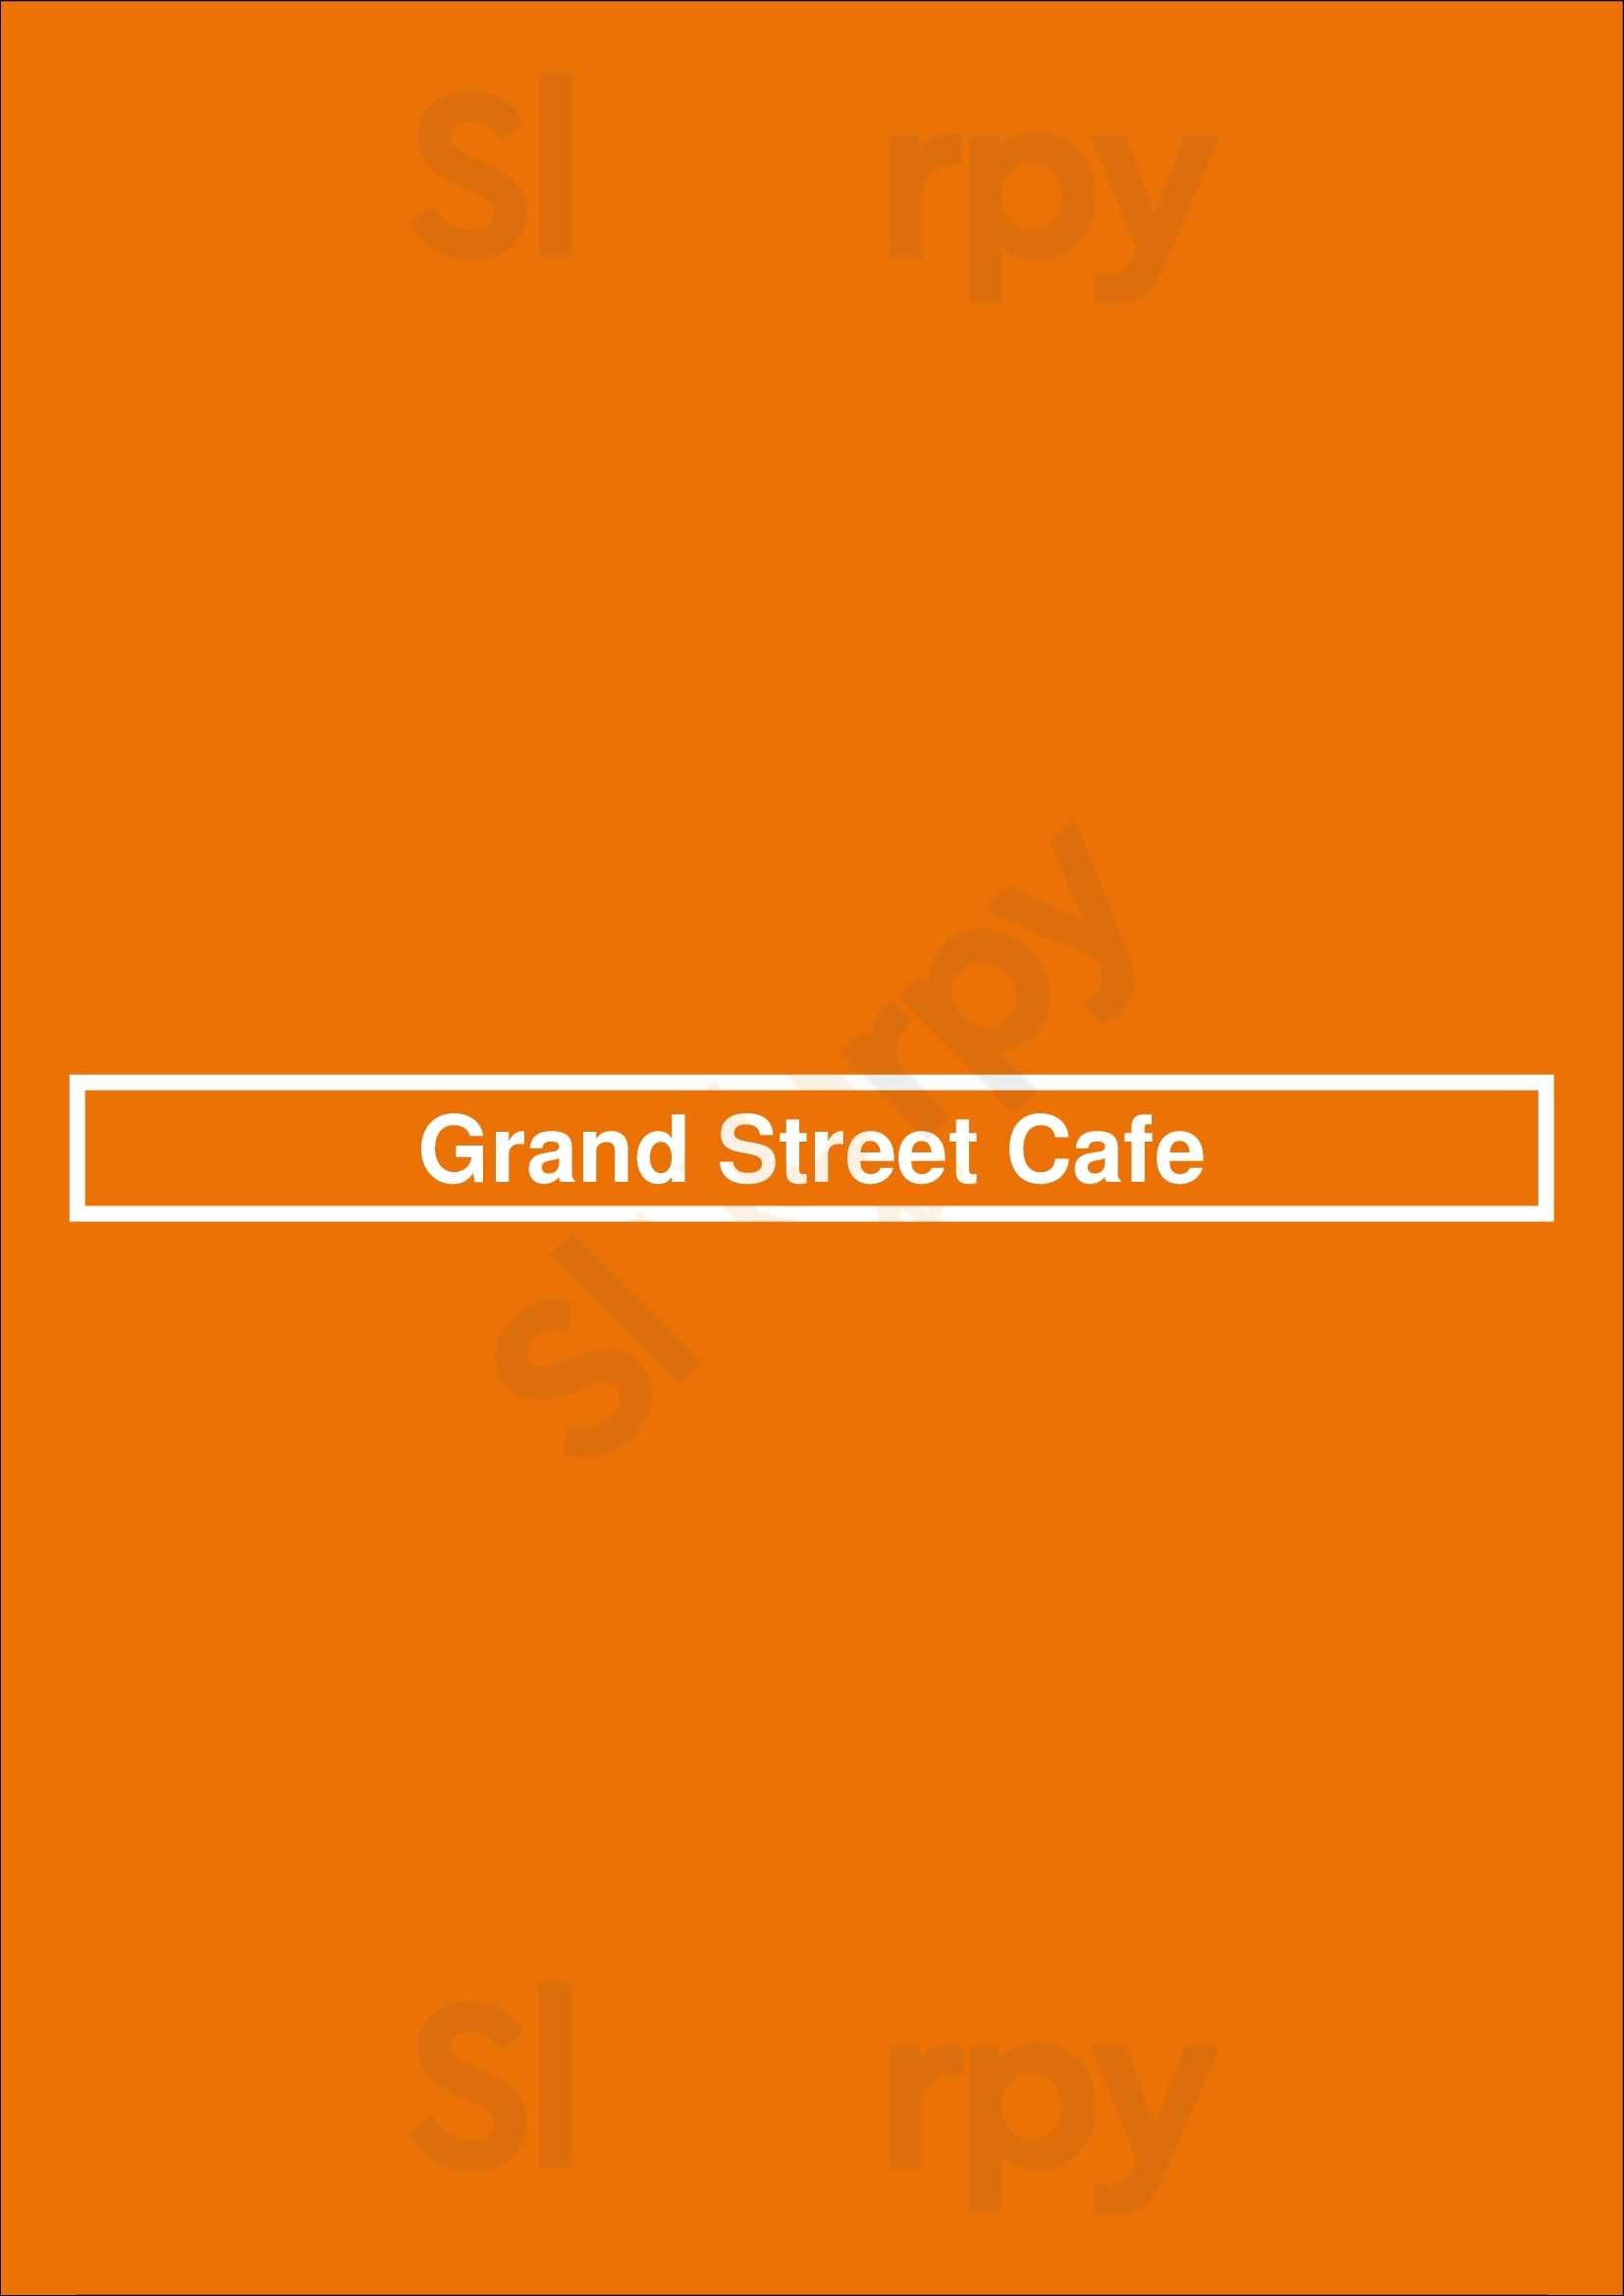 Grand Street Cafe Kansas City Menu - 1